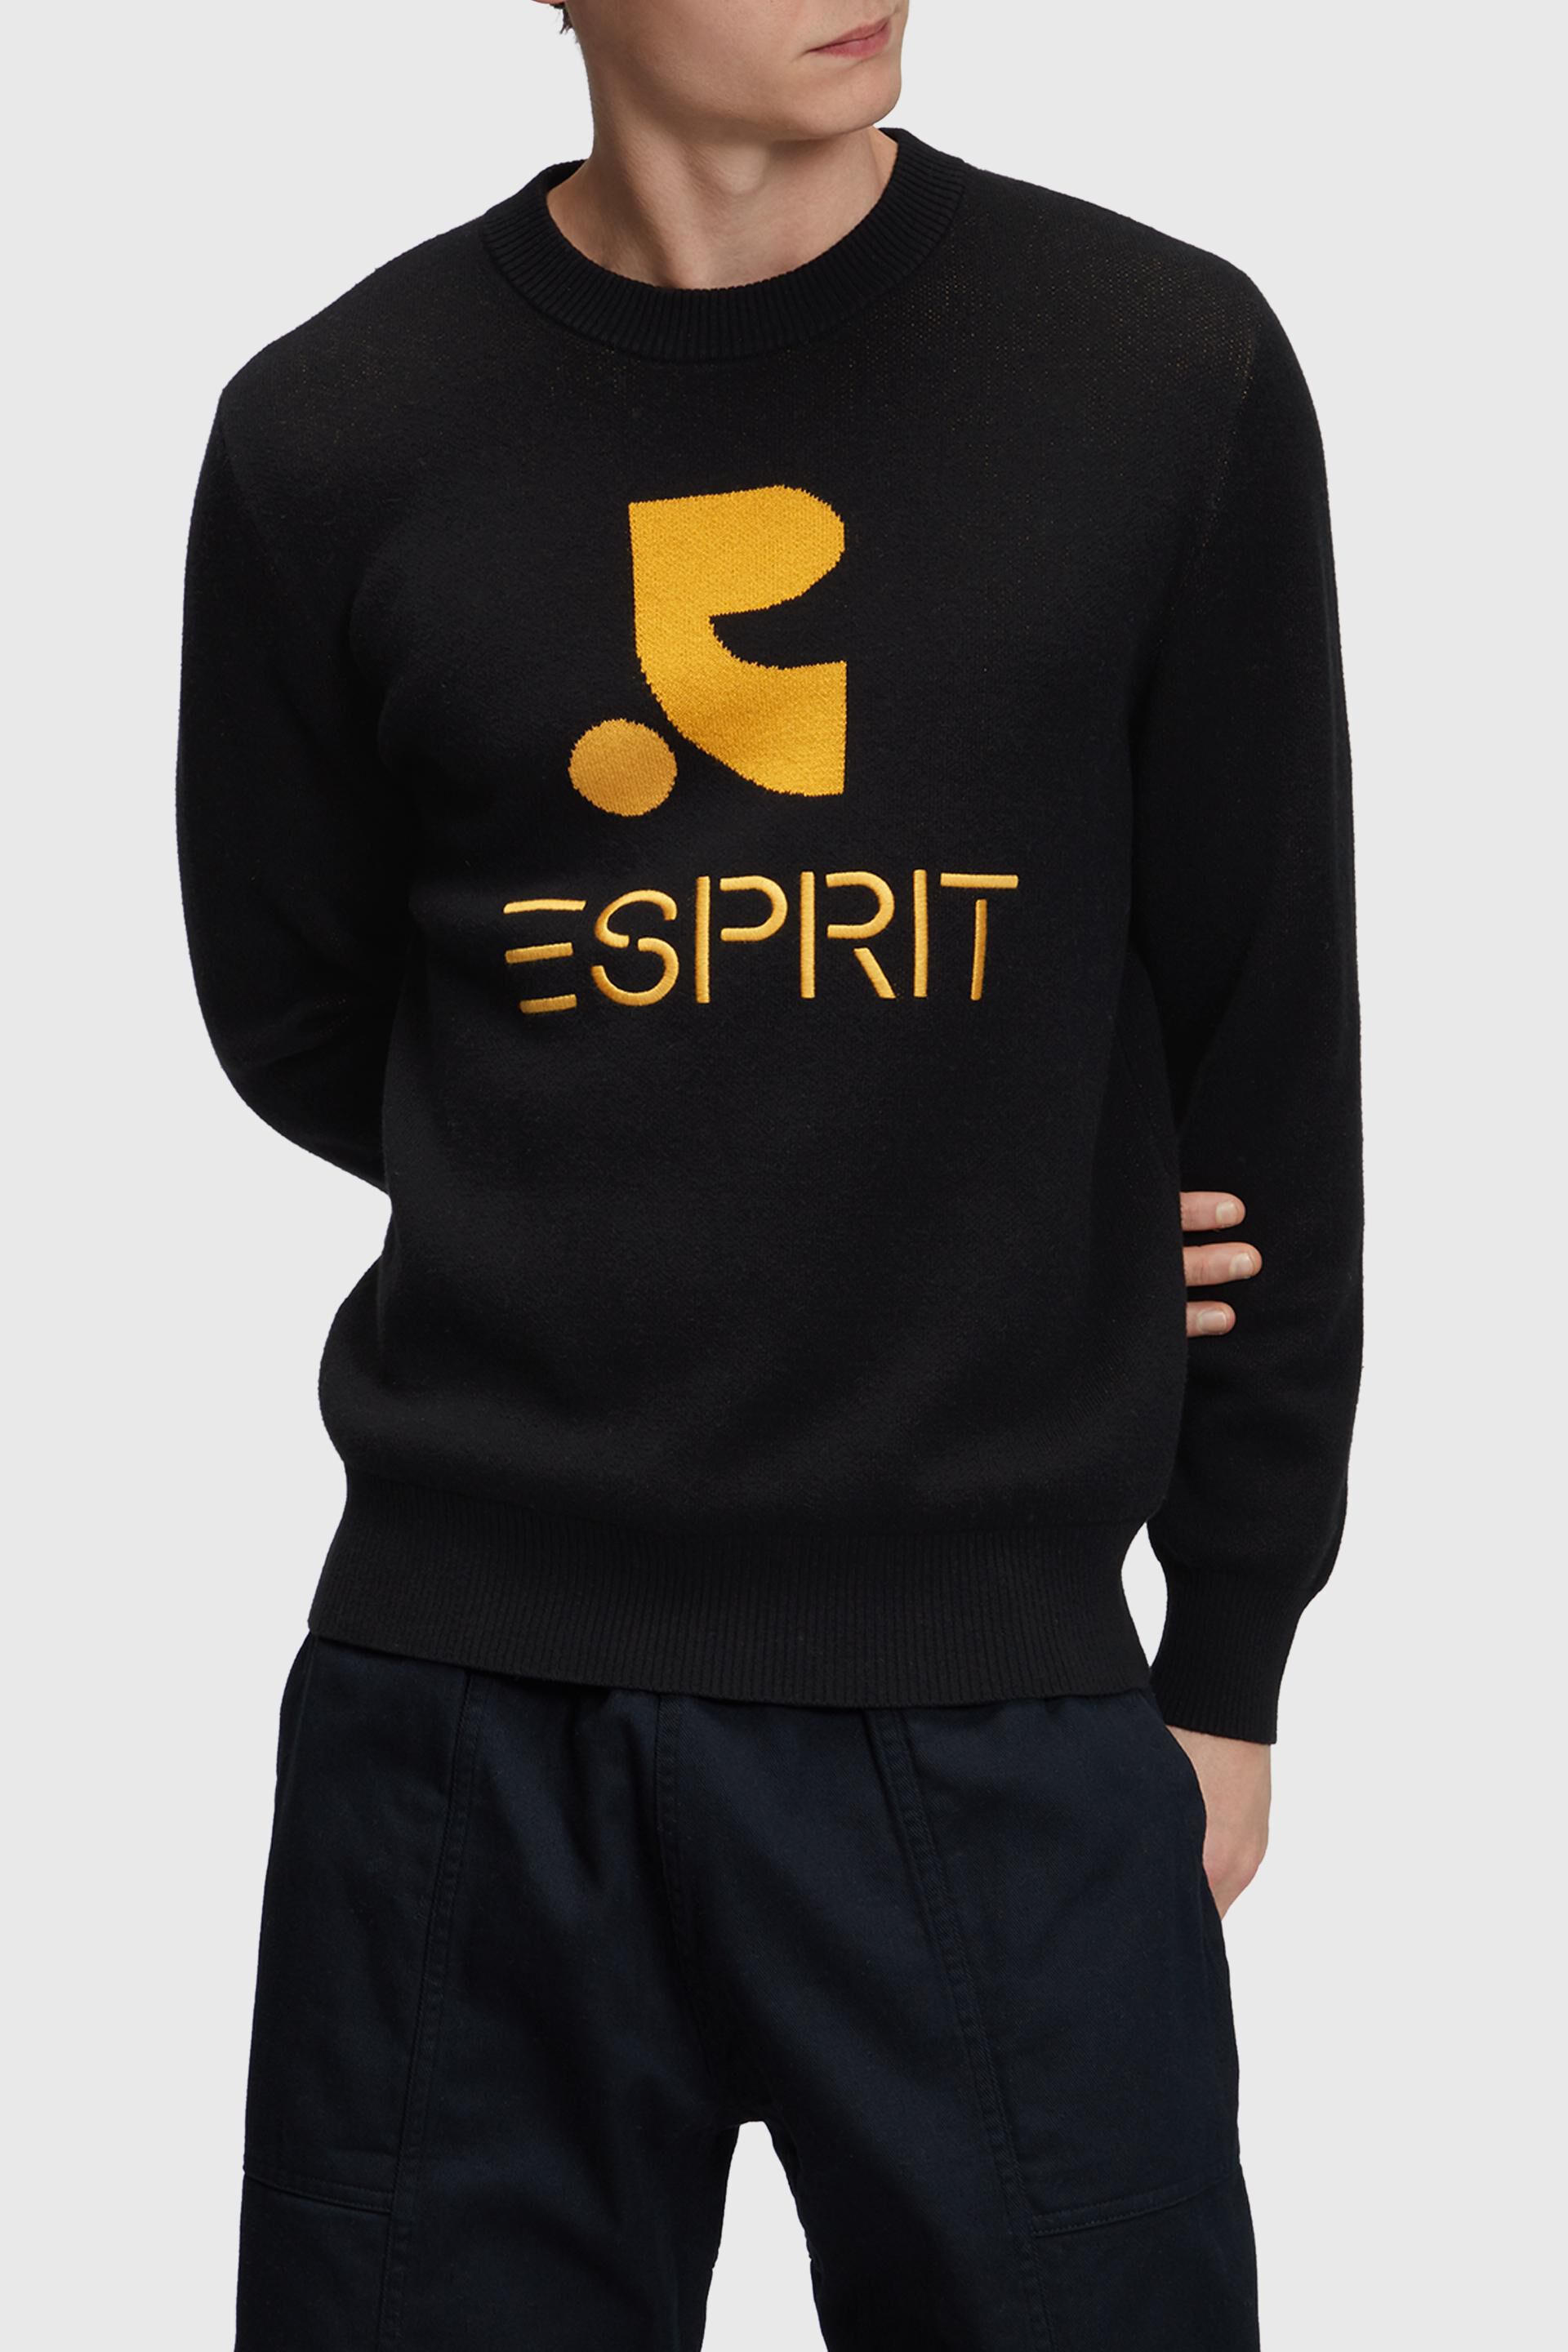 Esprit jumper cashmere with Crewneck